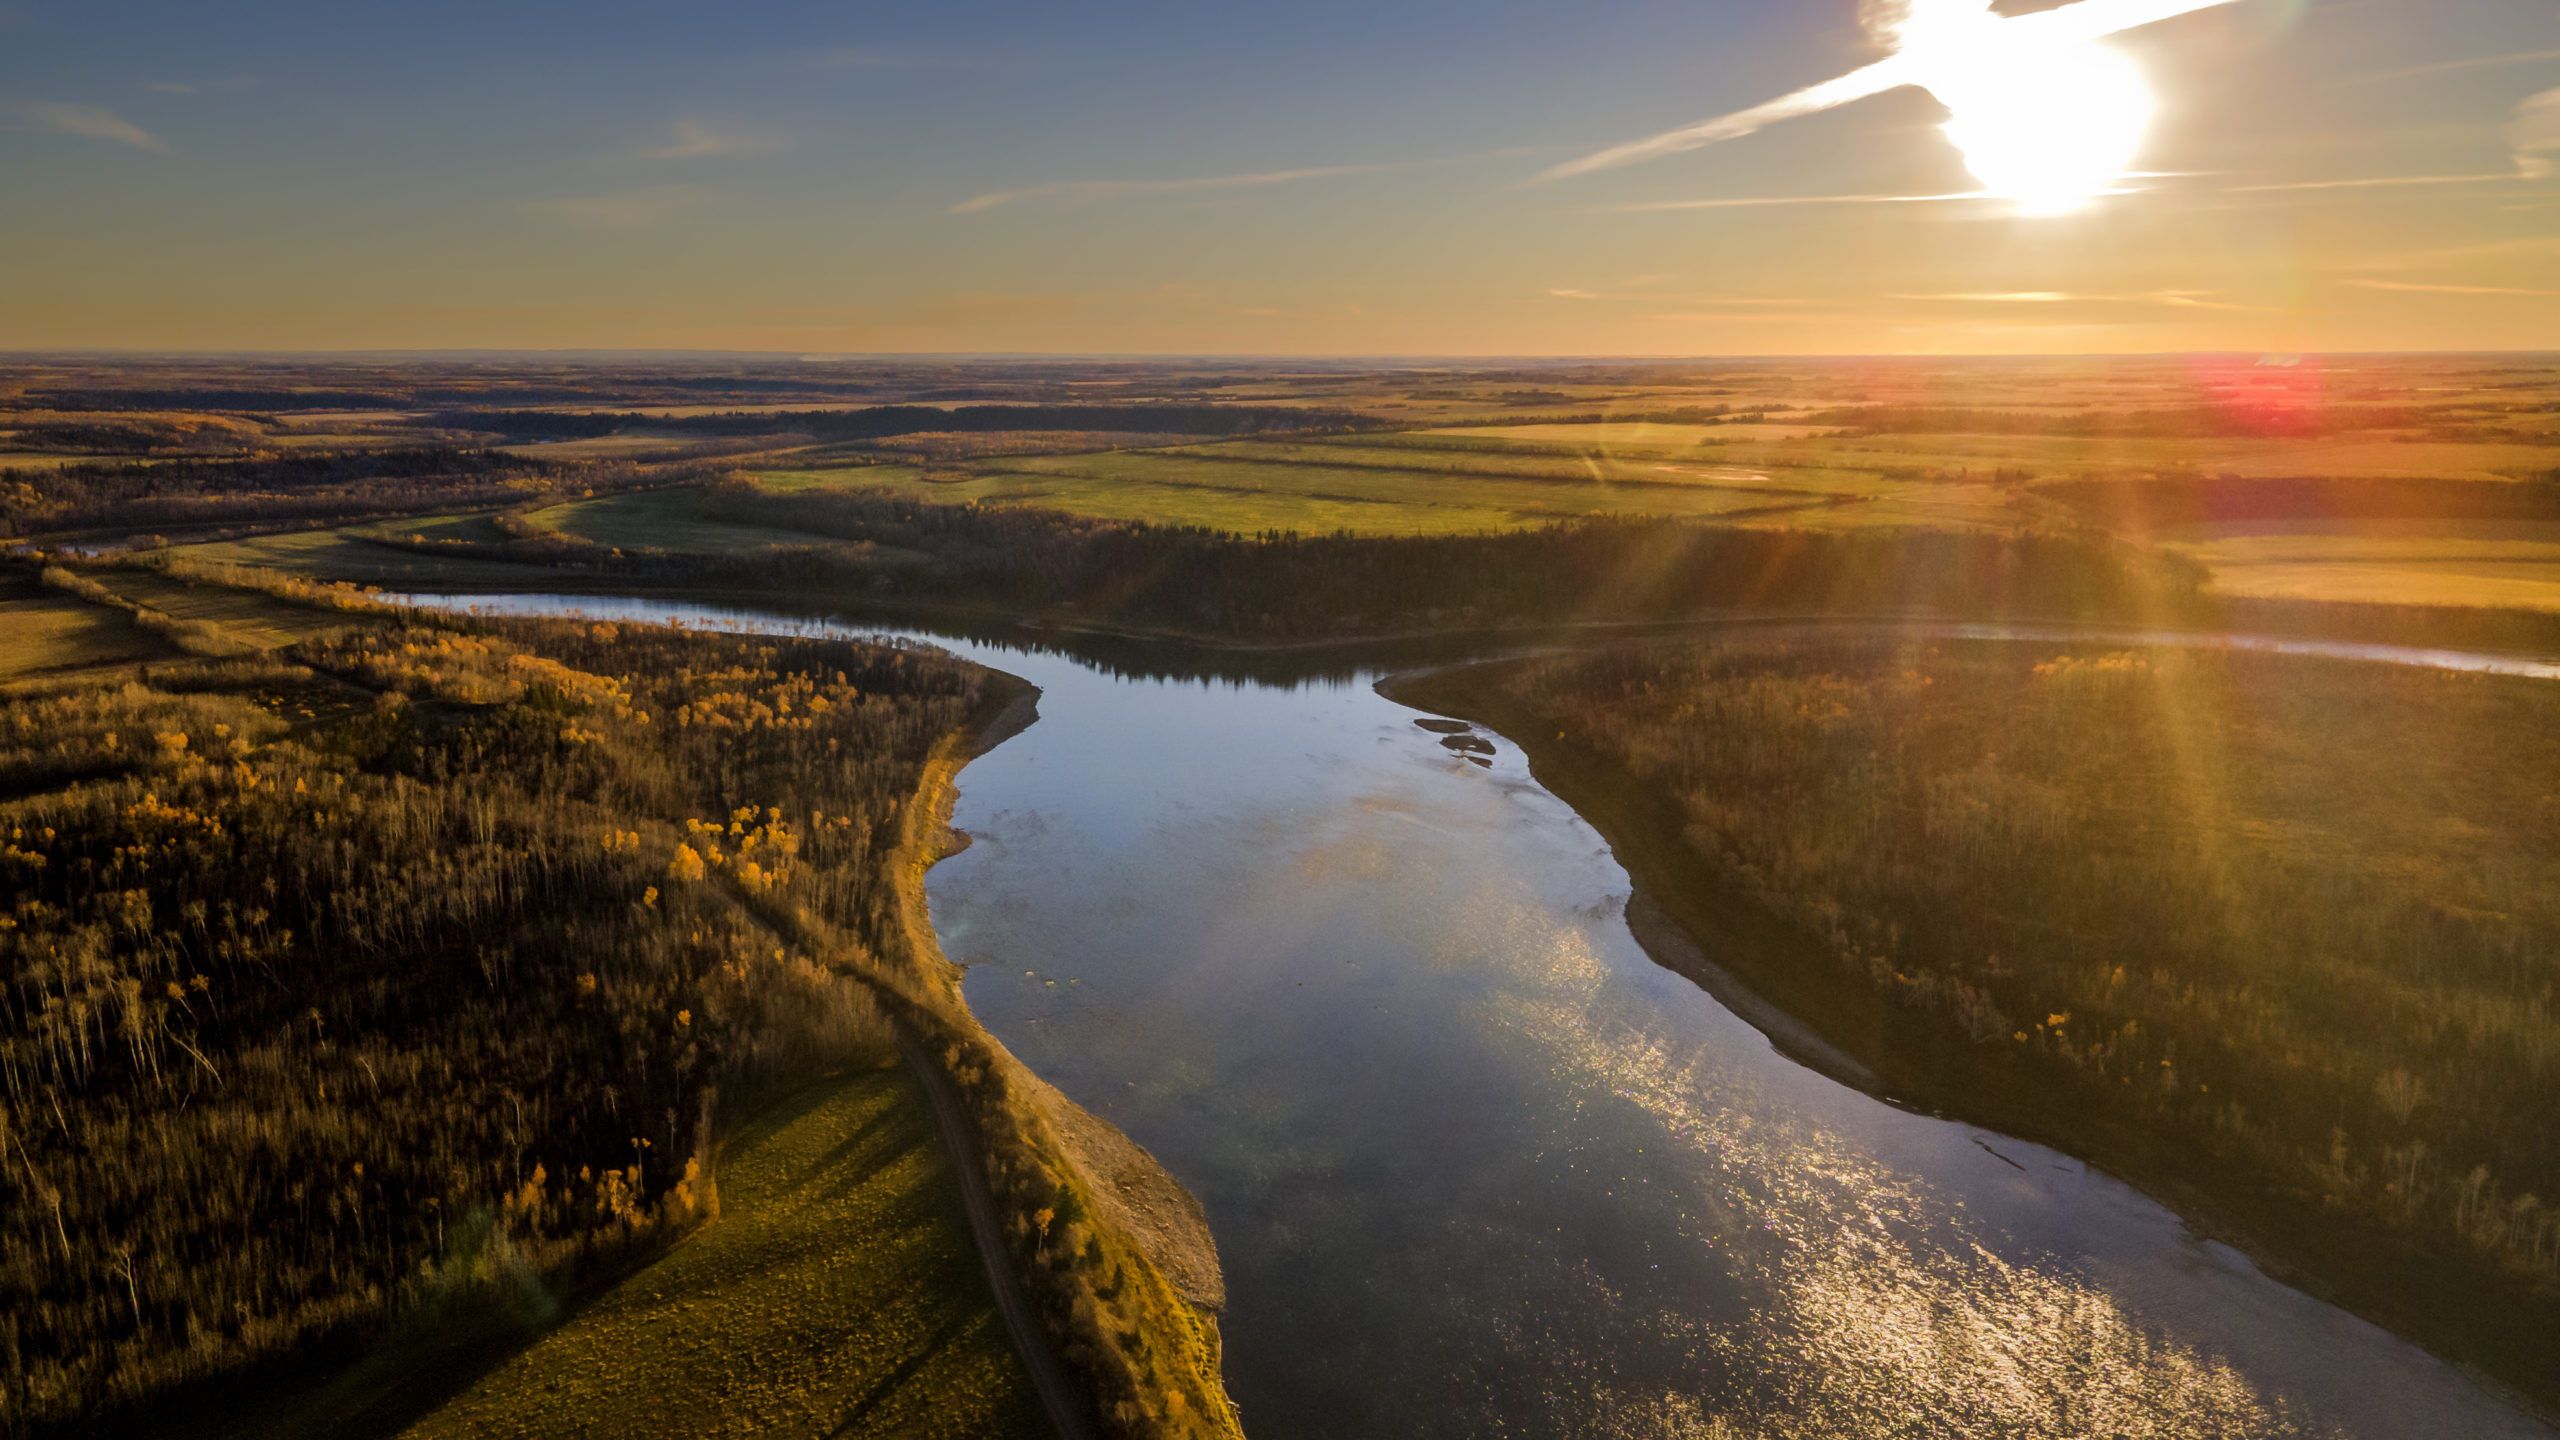 Saskatchewan River